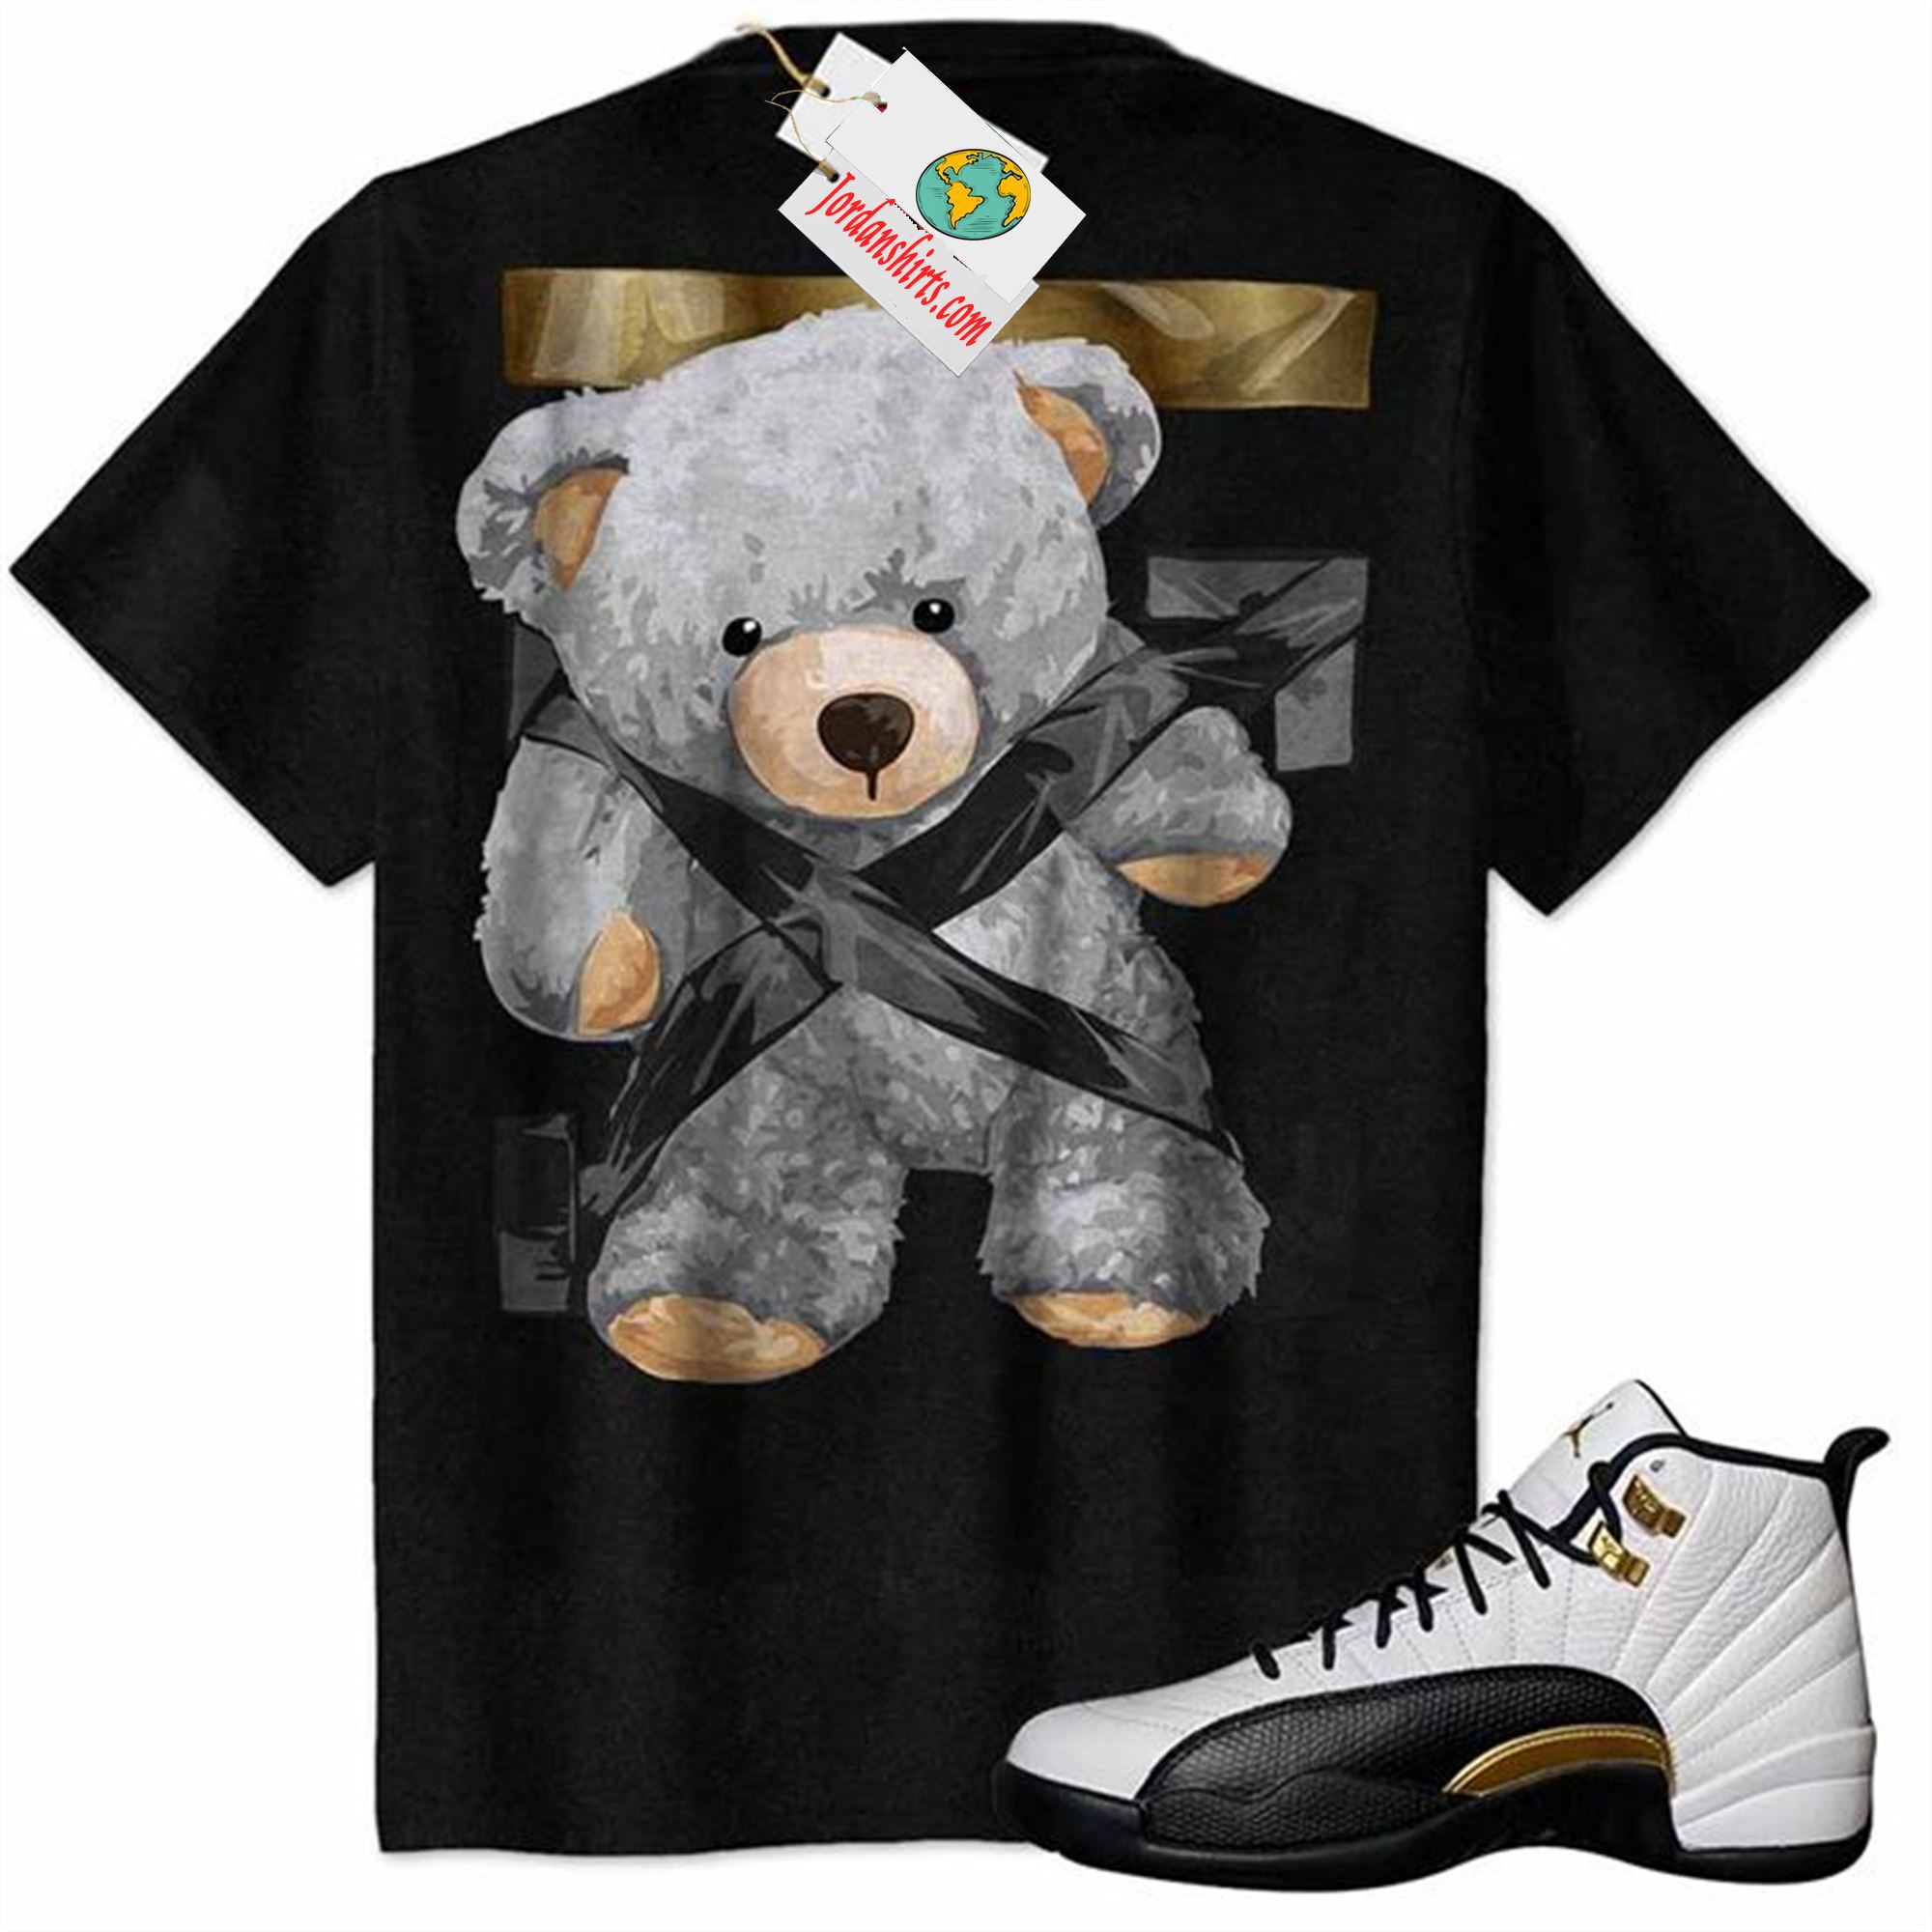 Jordan 12 Shirt, Teddy Bear Duck Tape Backside Black Air Jordan 12 Royalty 12s Size Up To 5xl